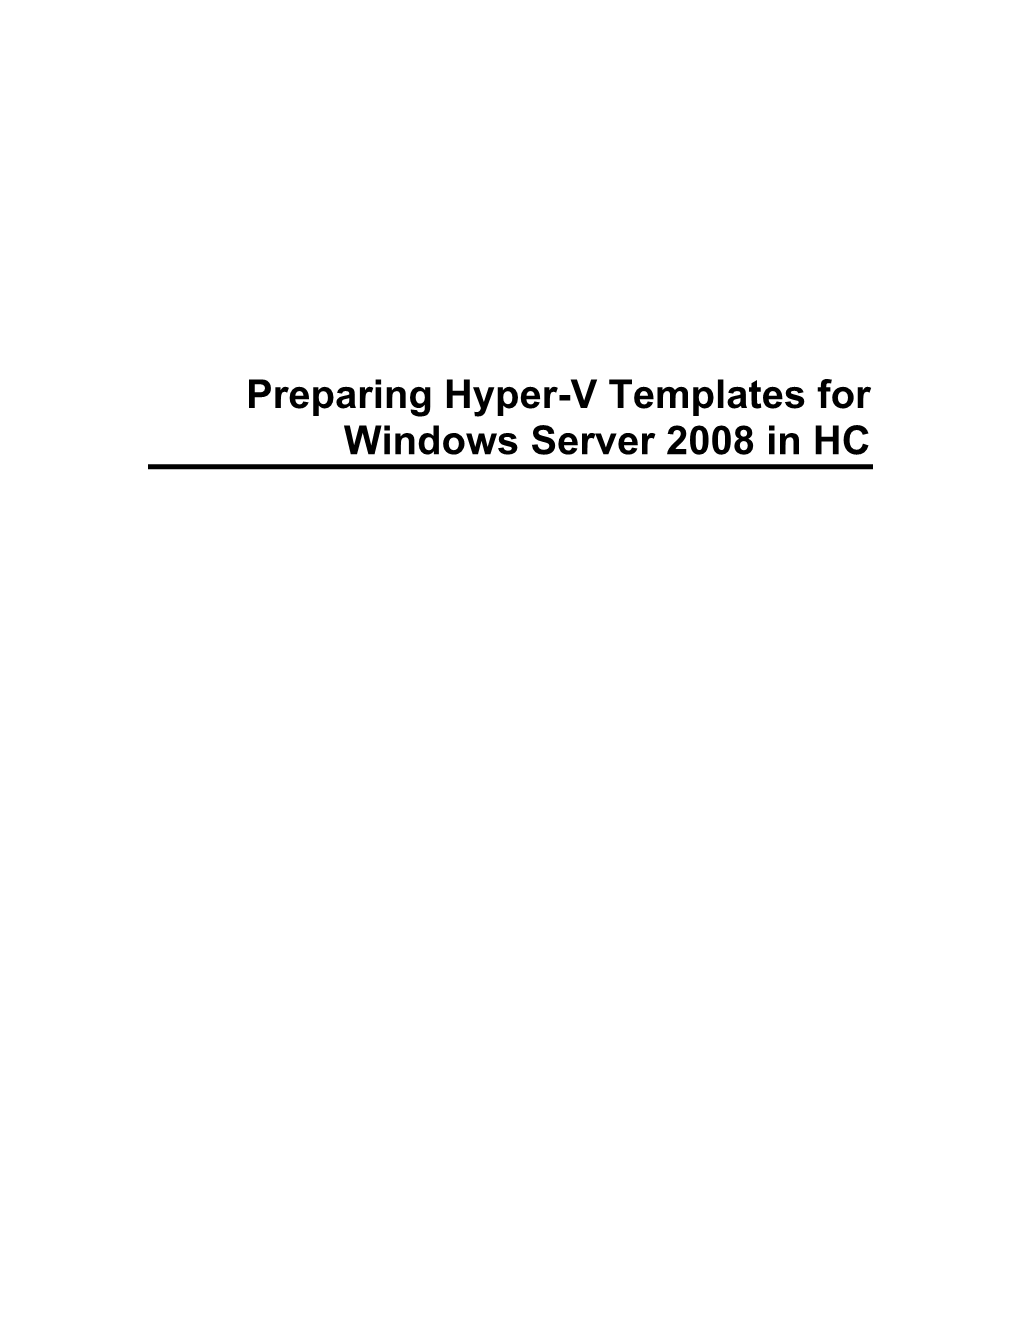 Preparing Hyper-V Templates with Windows Server 2008 in HC